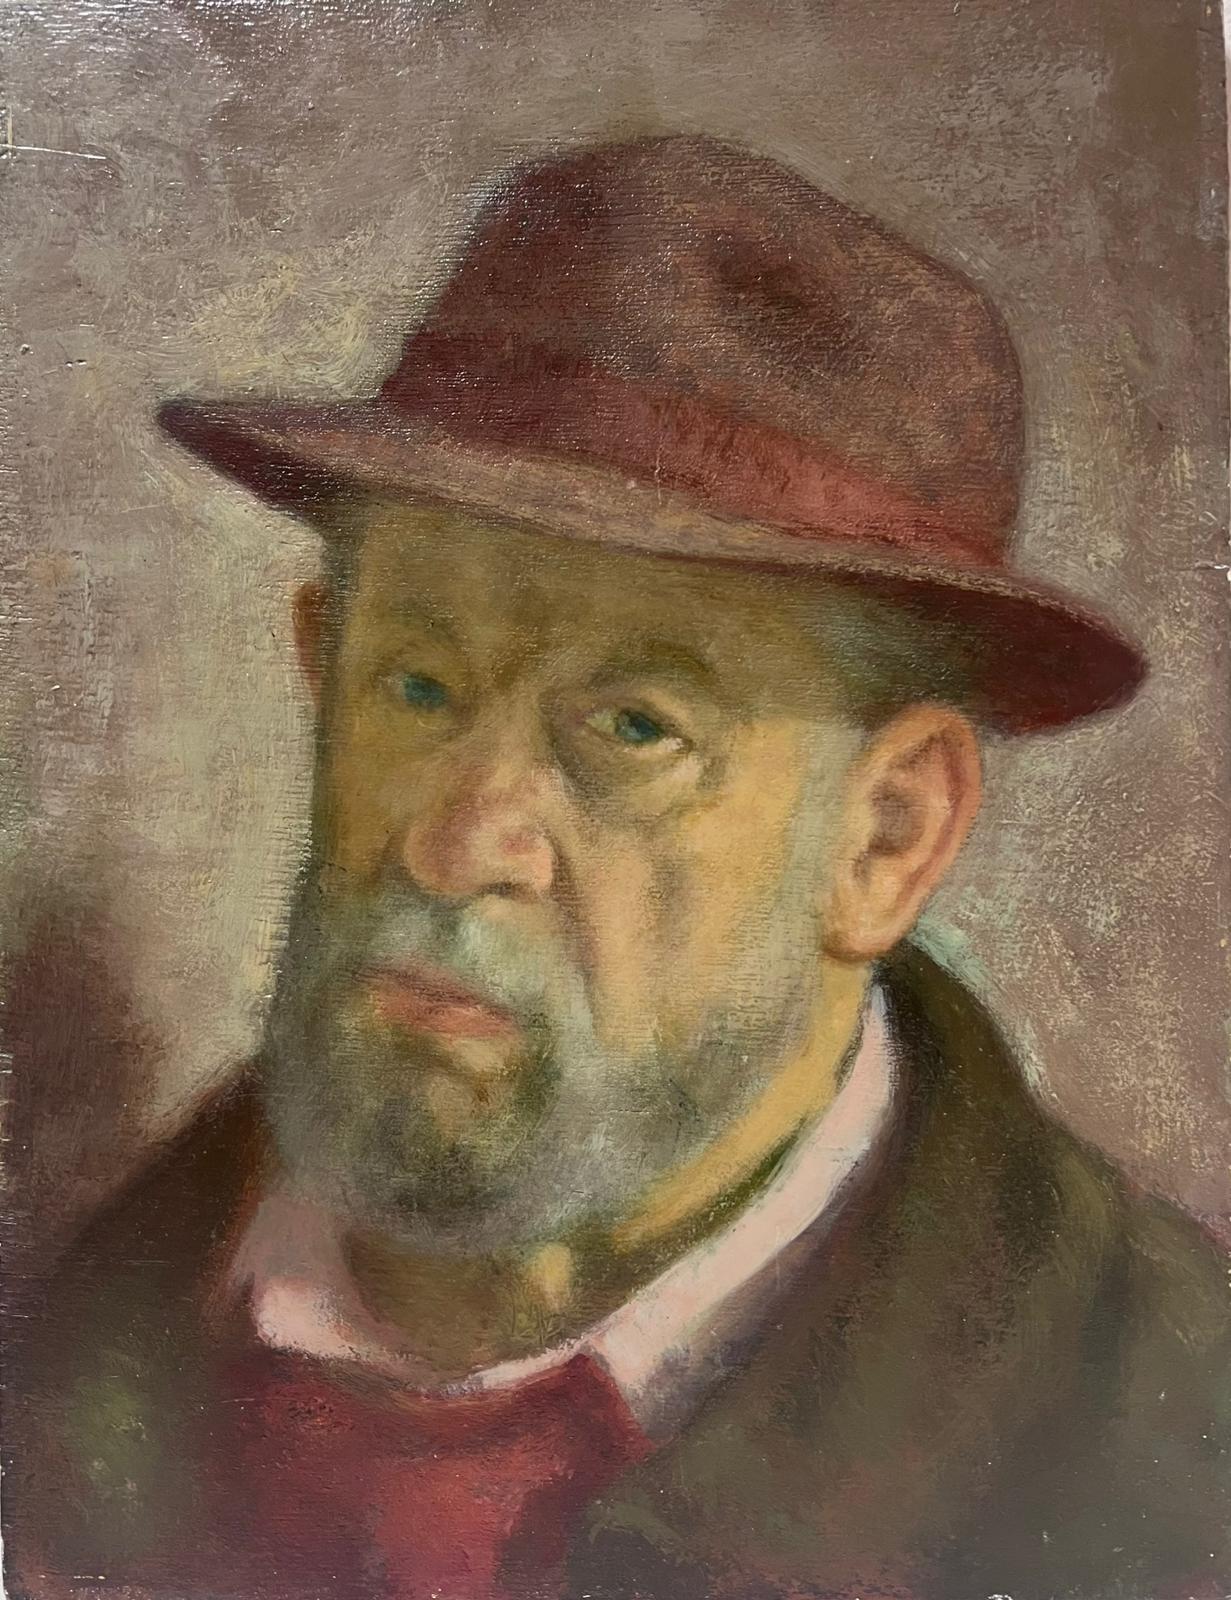 Jacob Markiel Figurative Painting - Mid 20th Century Portrait of Elderly Man with Beard Wearing Old Hat, oil paint